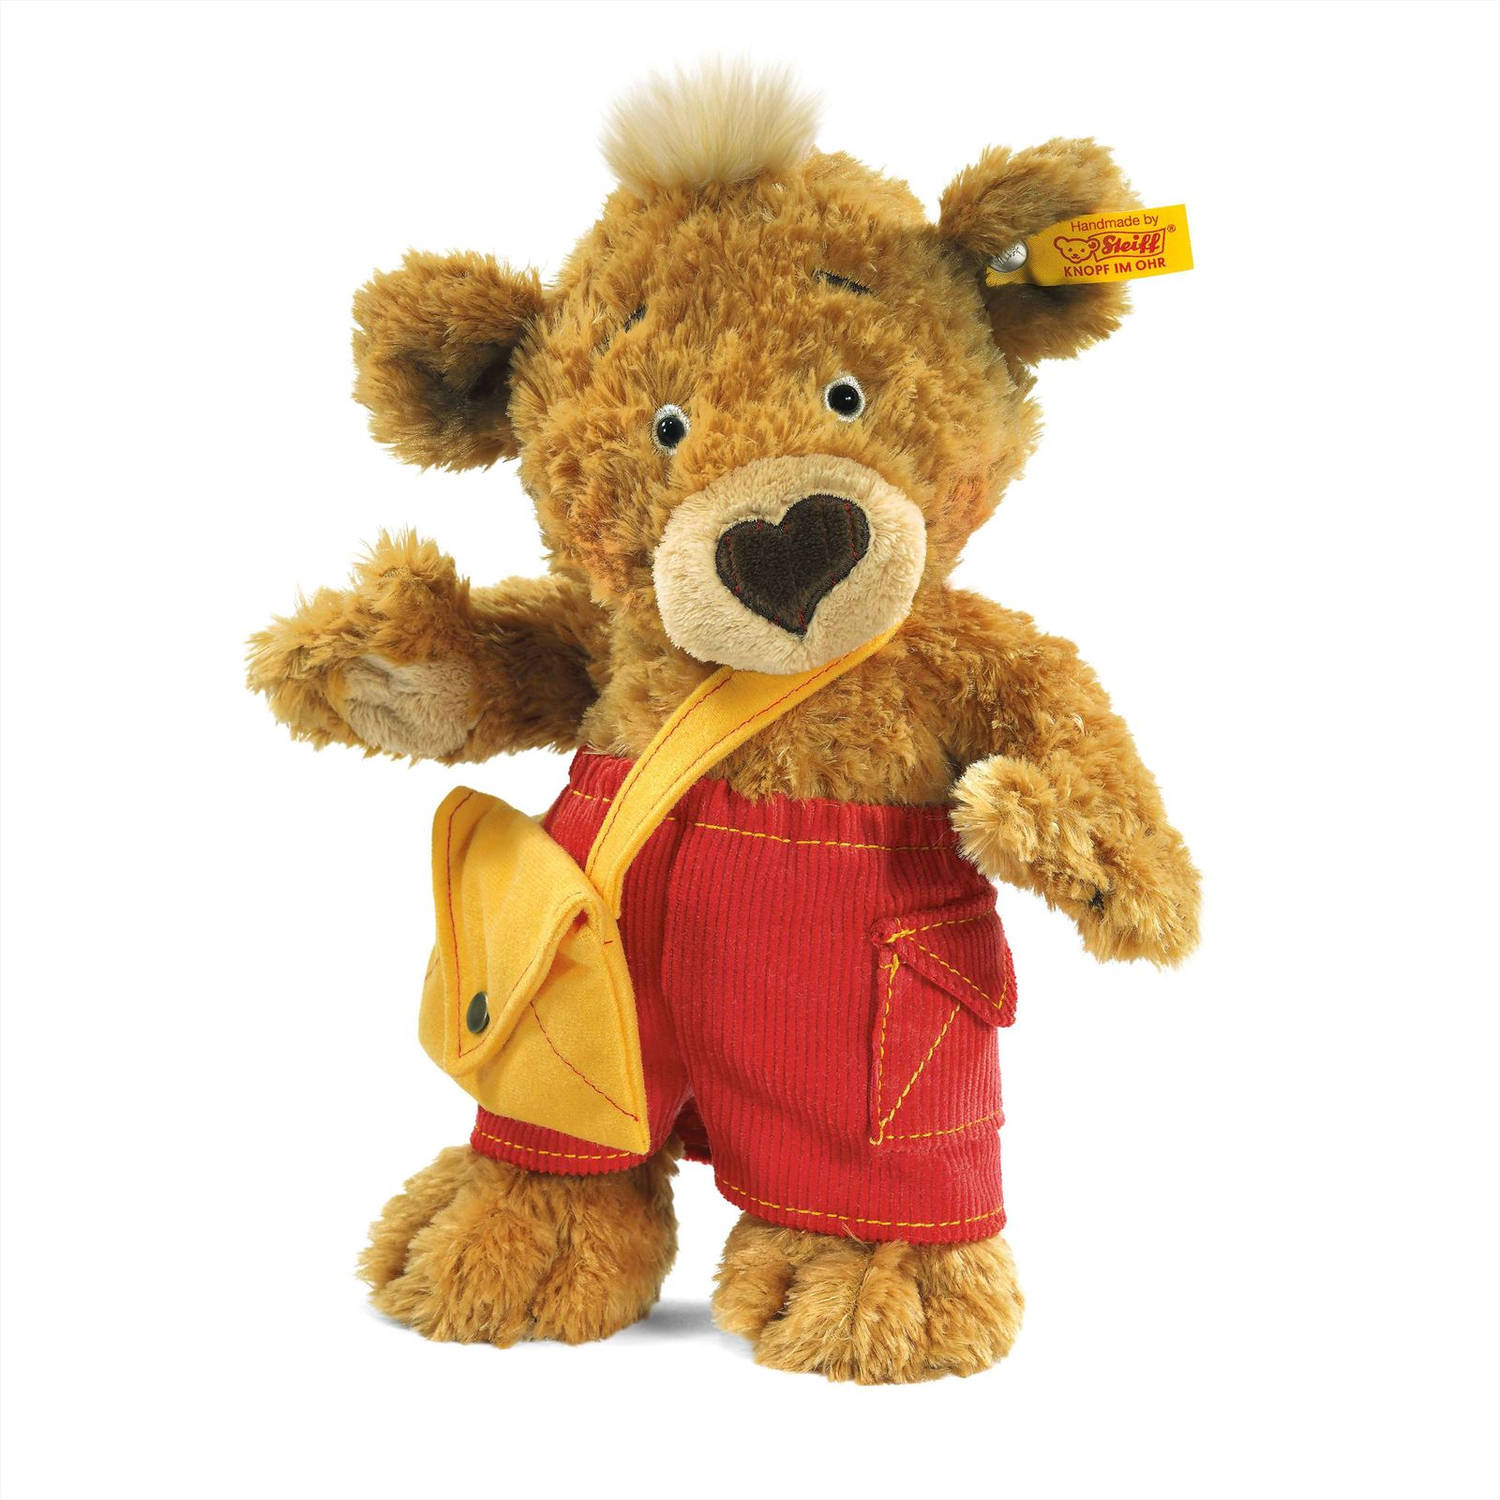 Steiff Knopf Teddy Bear